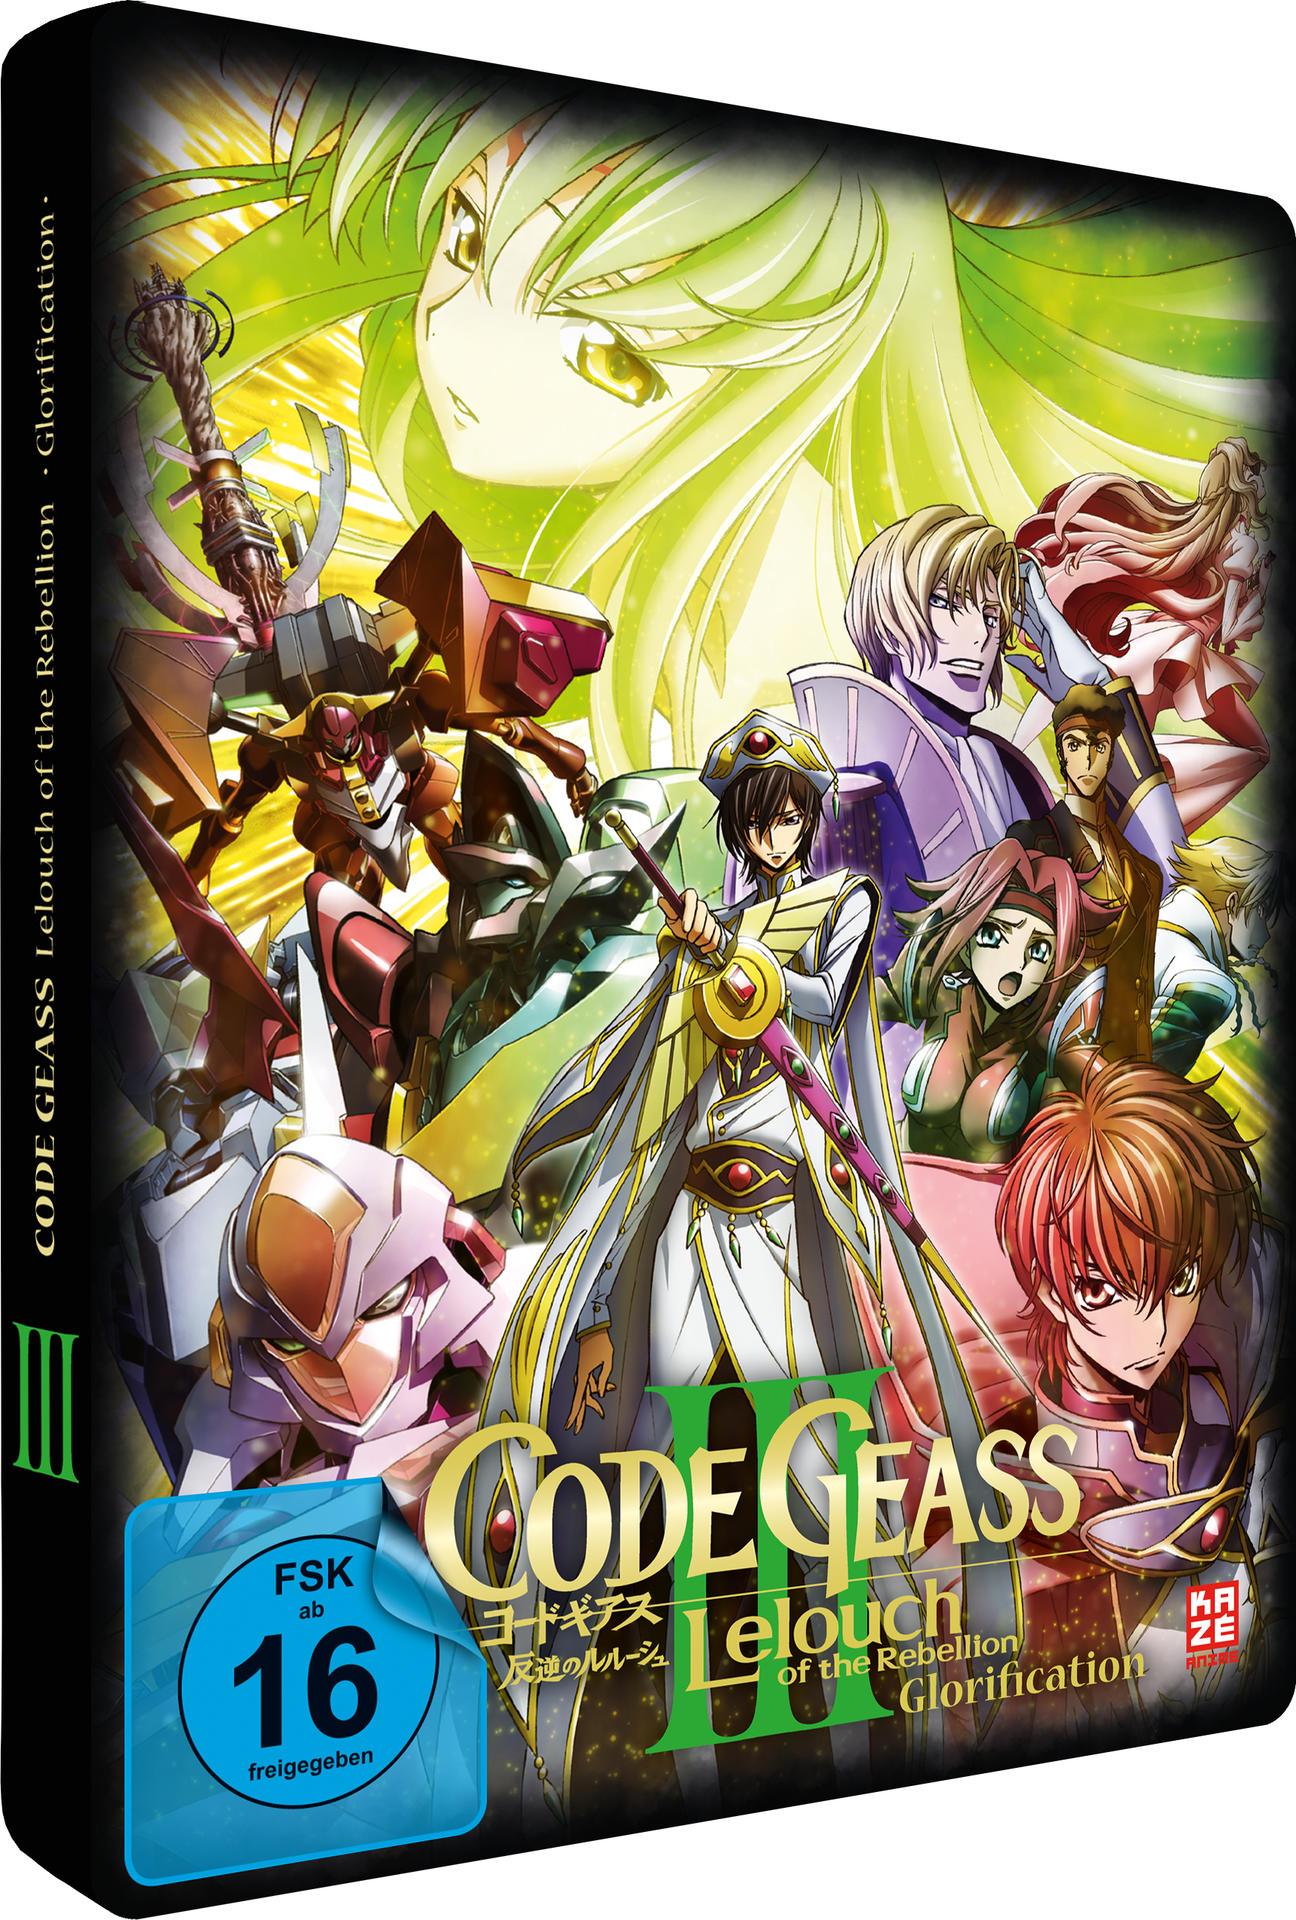 Code Geass: DVD Glorification Lelouch - Rebellion the III. of (Movie)